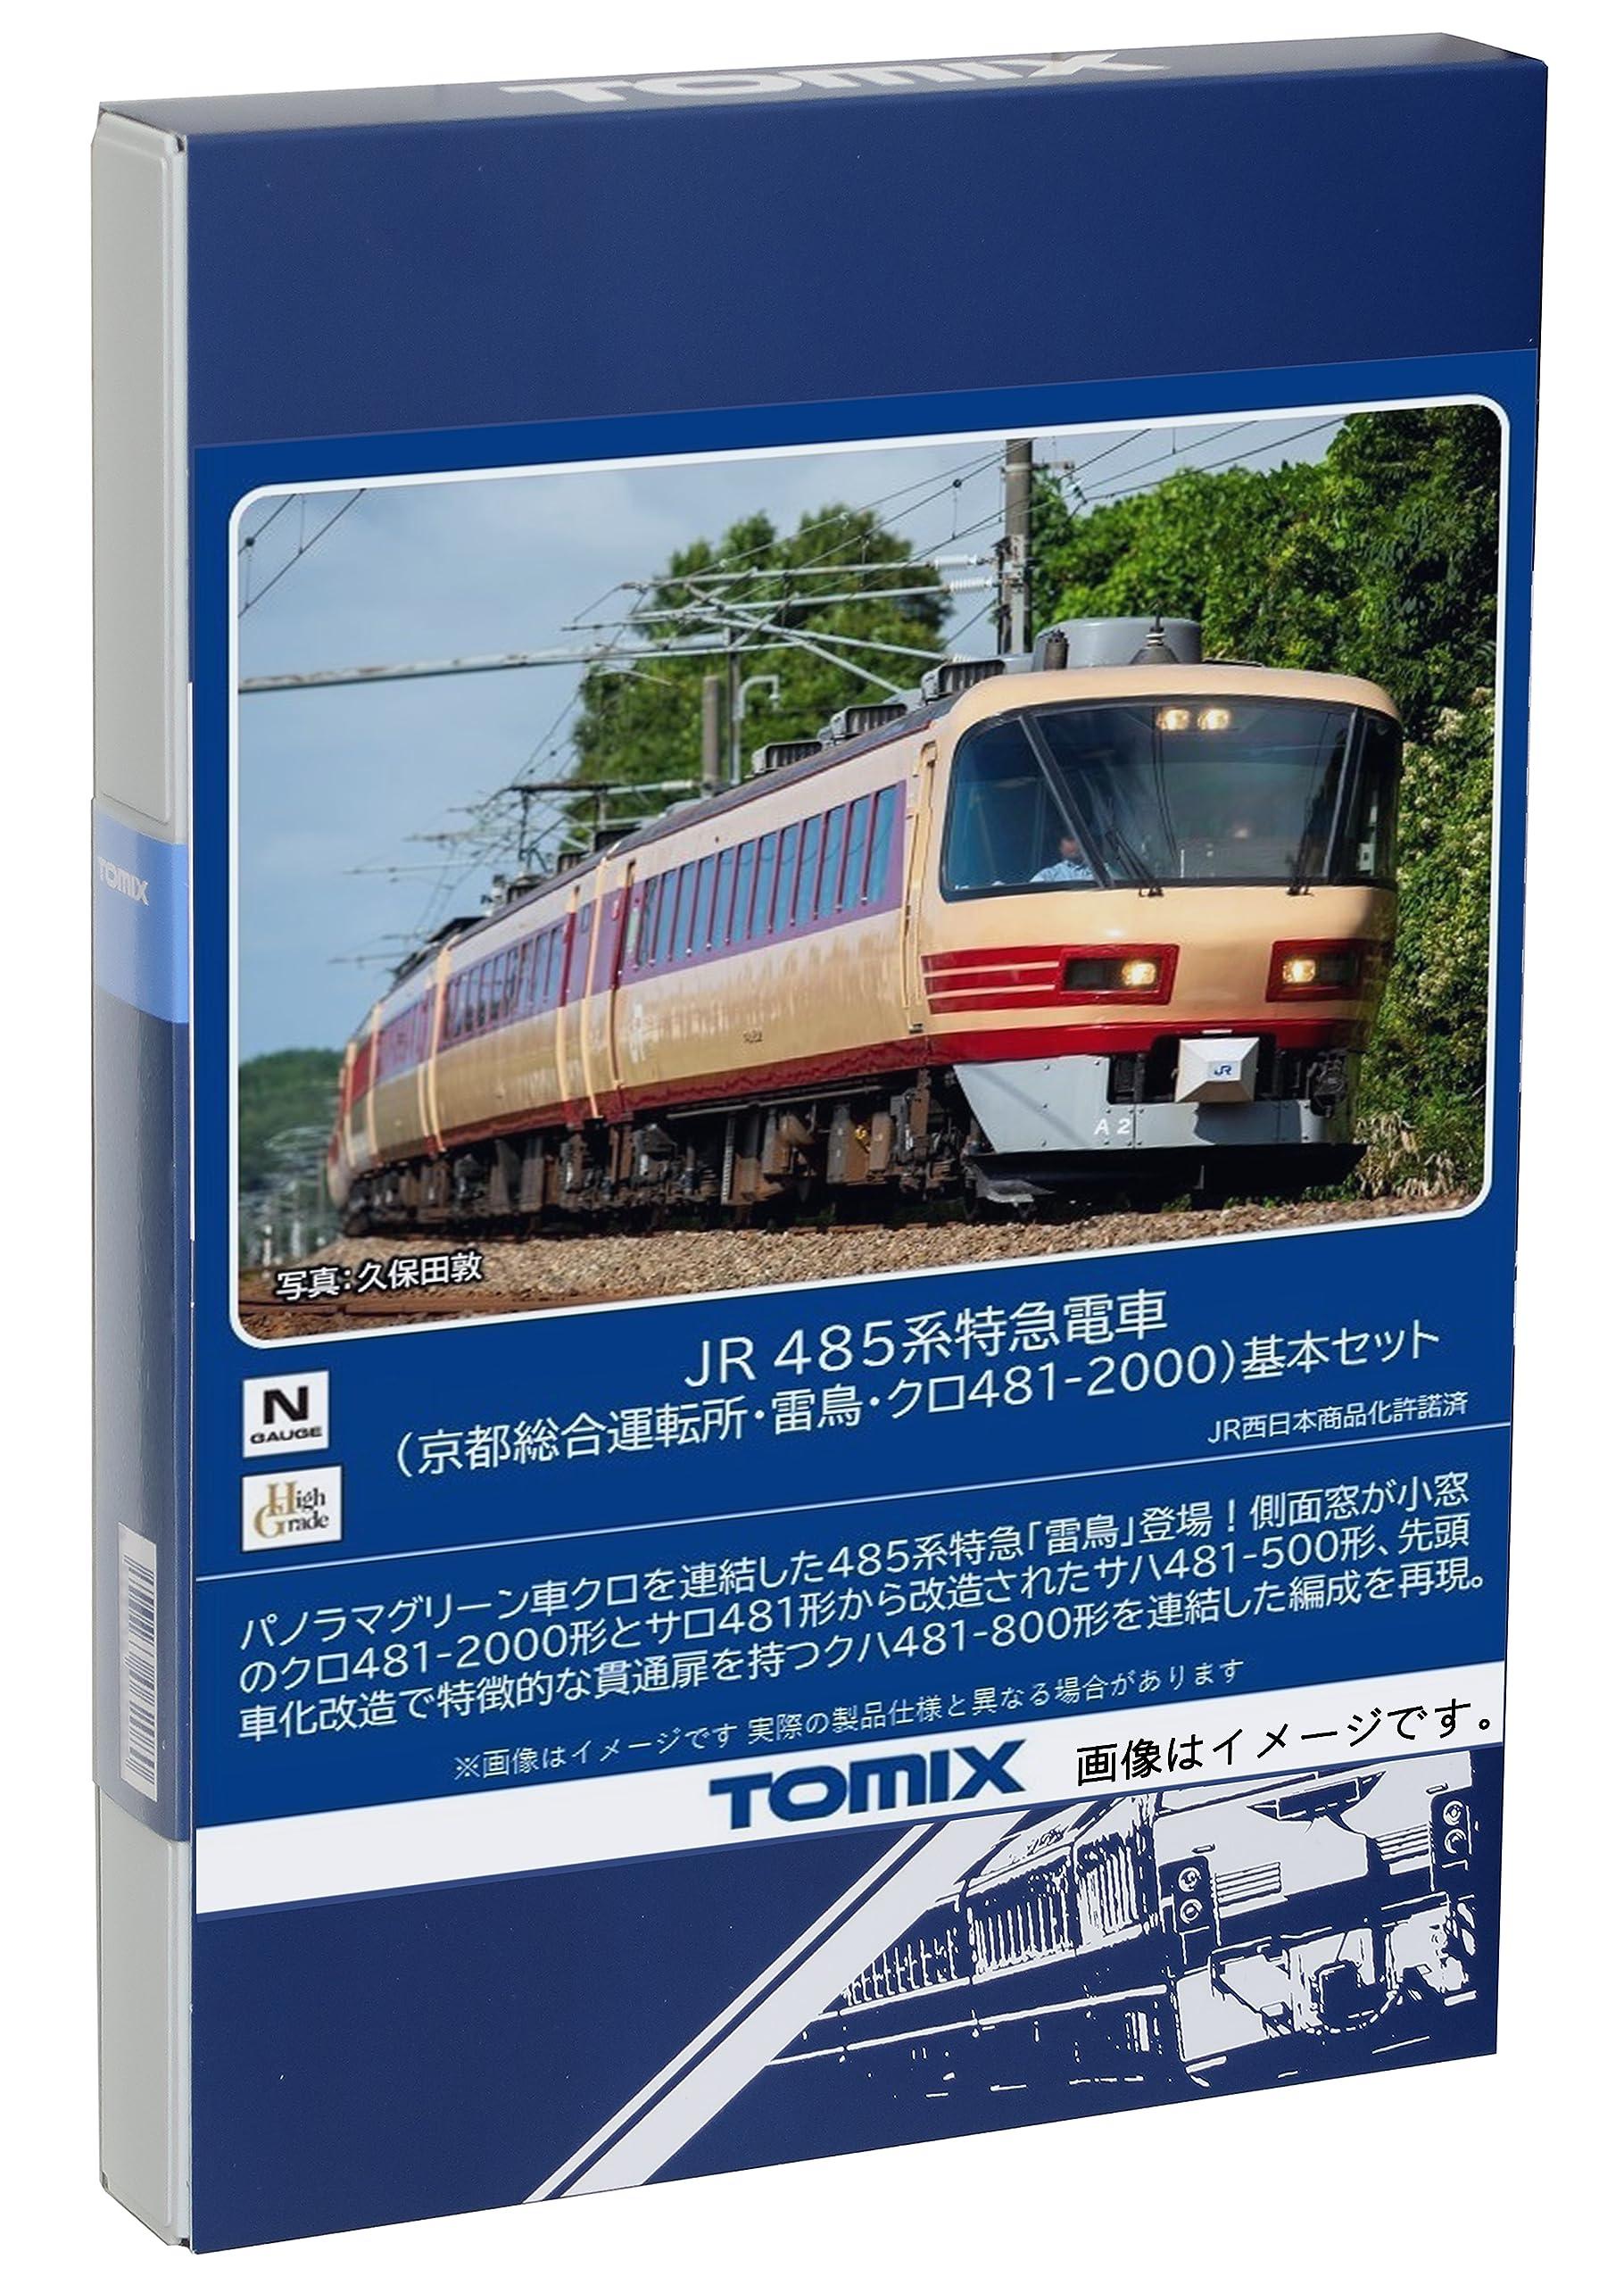 TOMIX Nゲージ JR 485系 京都総合運転所 雷鳥 クロ481-2000 基本セット 98548 鉄道模型 電車